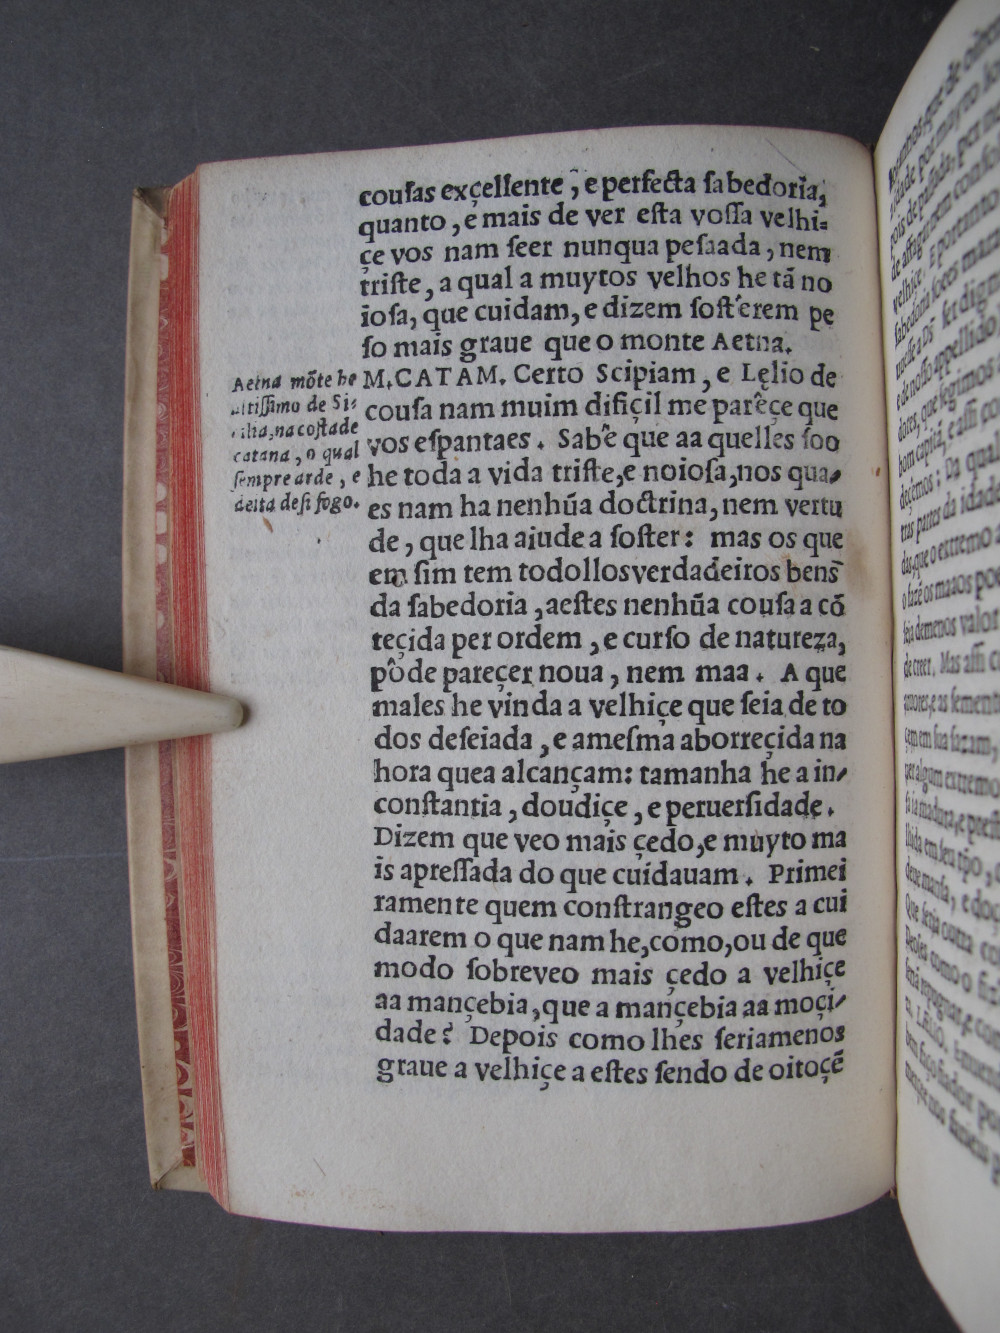 Folio A5 verso